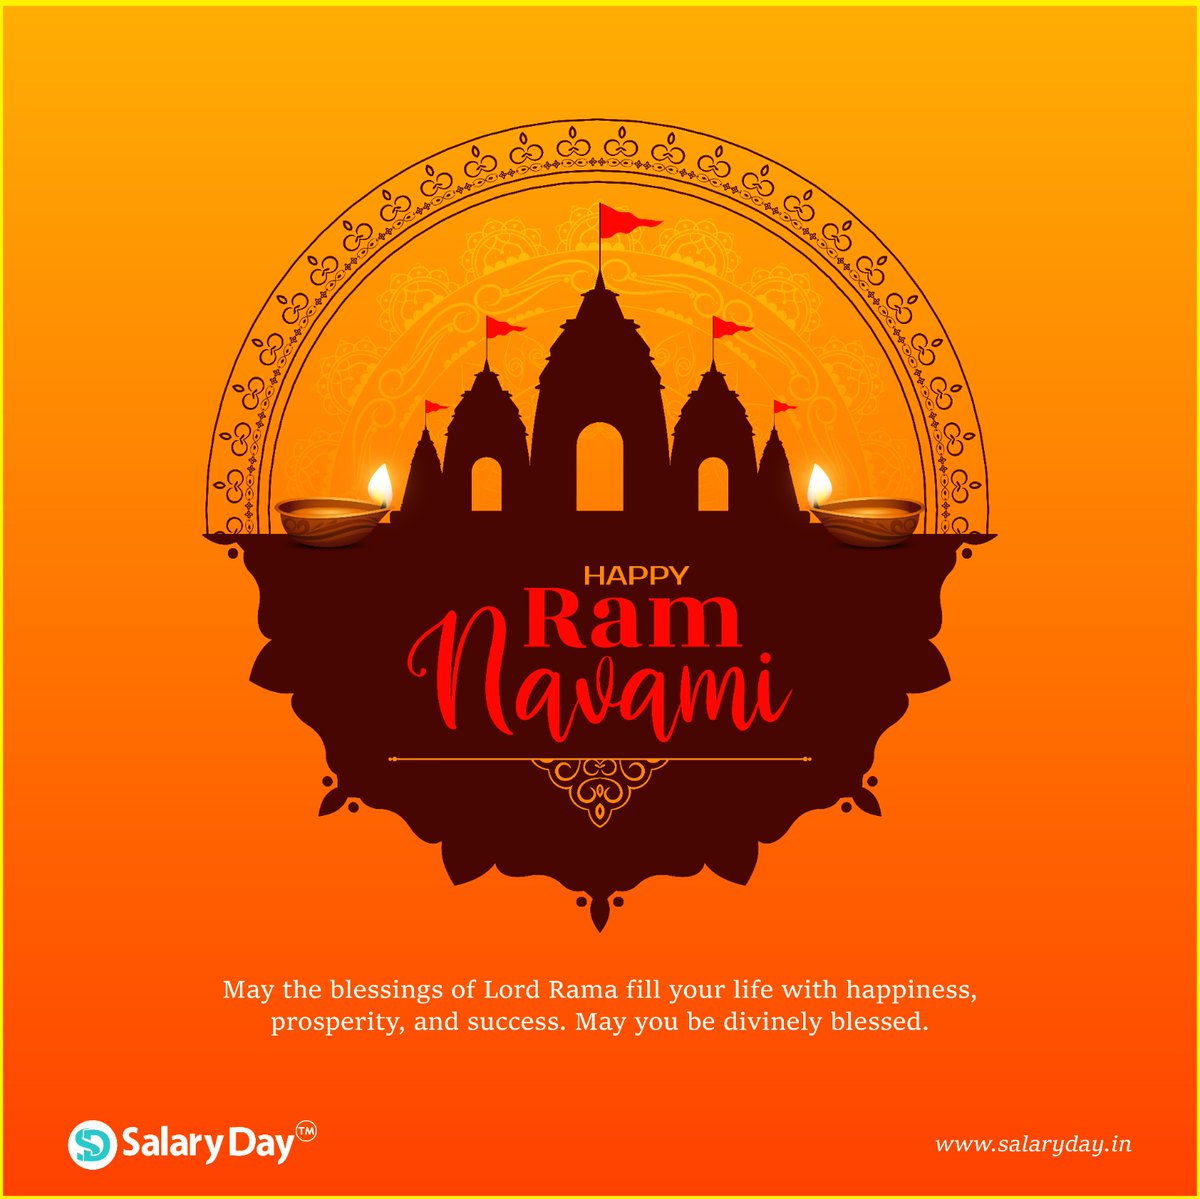 May the divine grace of Lord Rama always be with you and your family. @Salary_Day Wishes you a very happy and prosperous Rama Navami!

#RamNavmi #श्रीराम #HappyRamNavami2023 #ramnavami2023 #JaiShreeRam #JaiSiyaRam #salaryday #salarydayapp